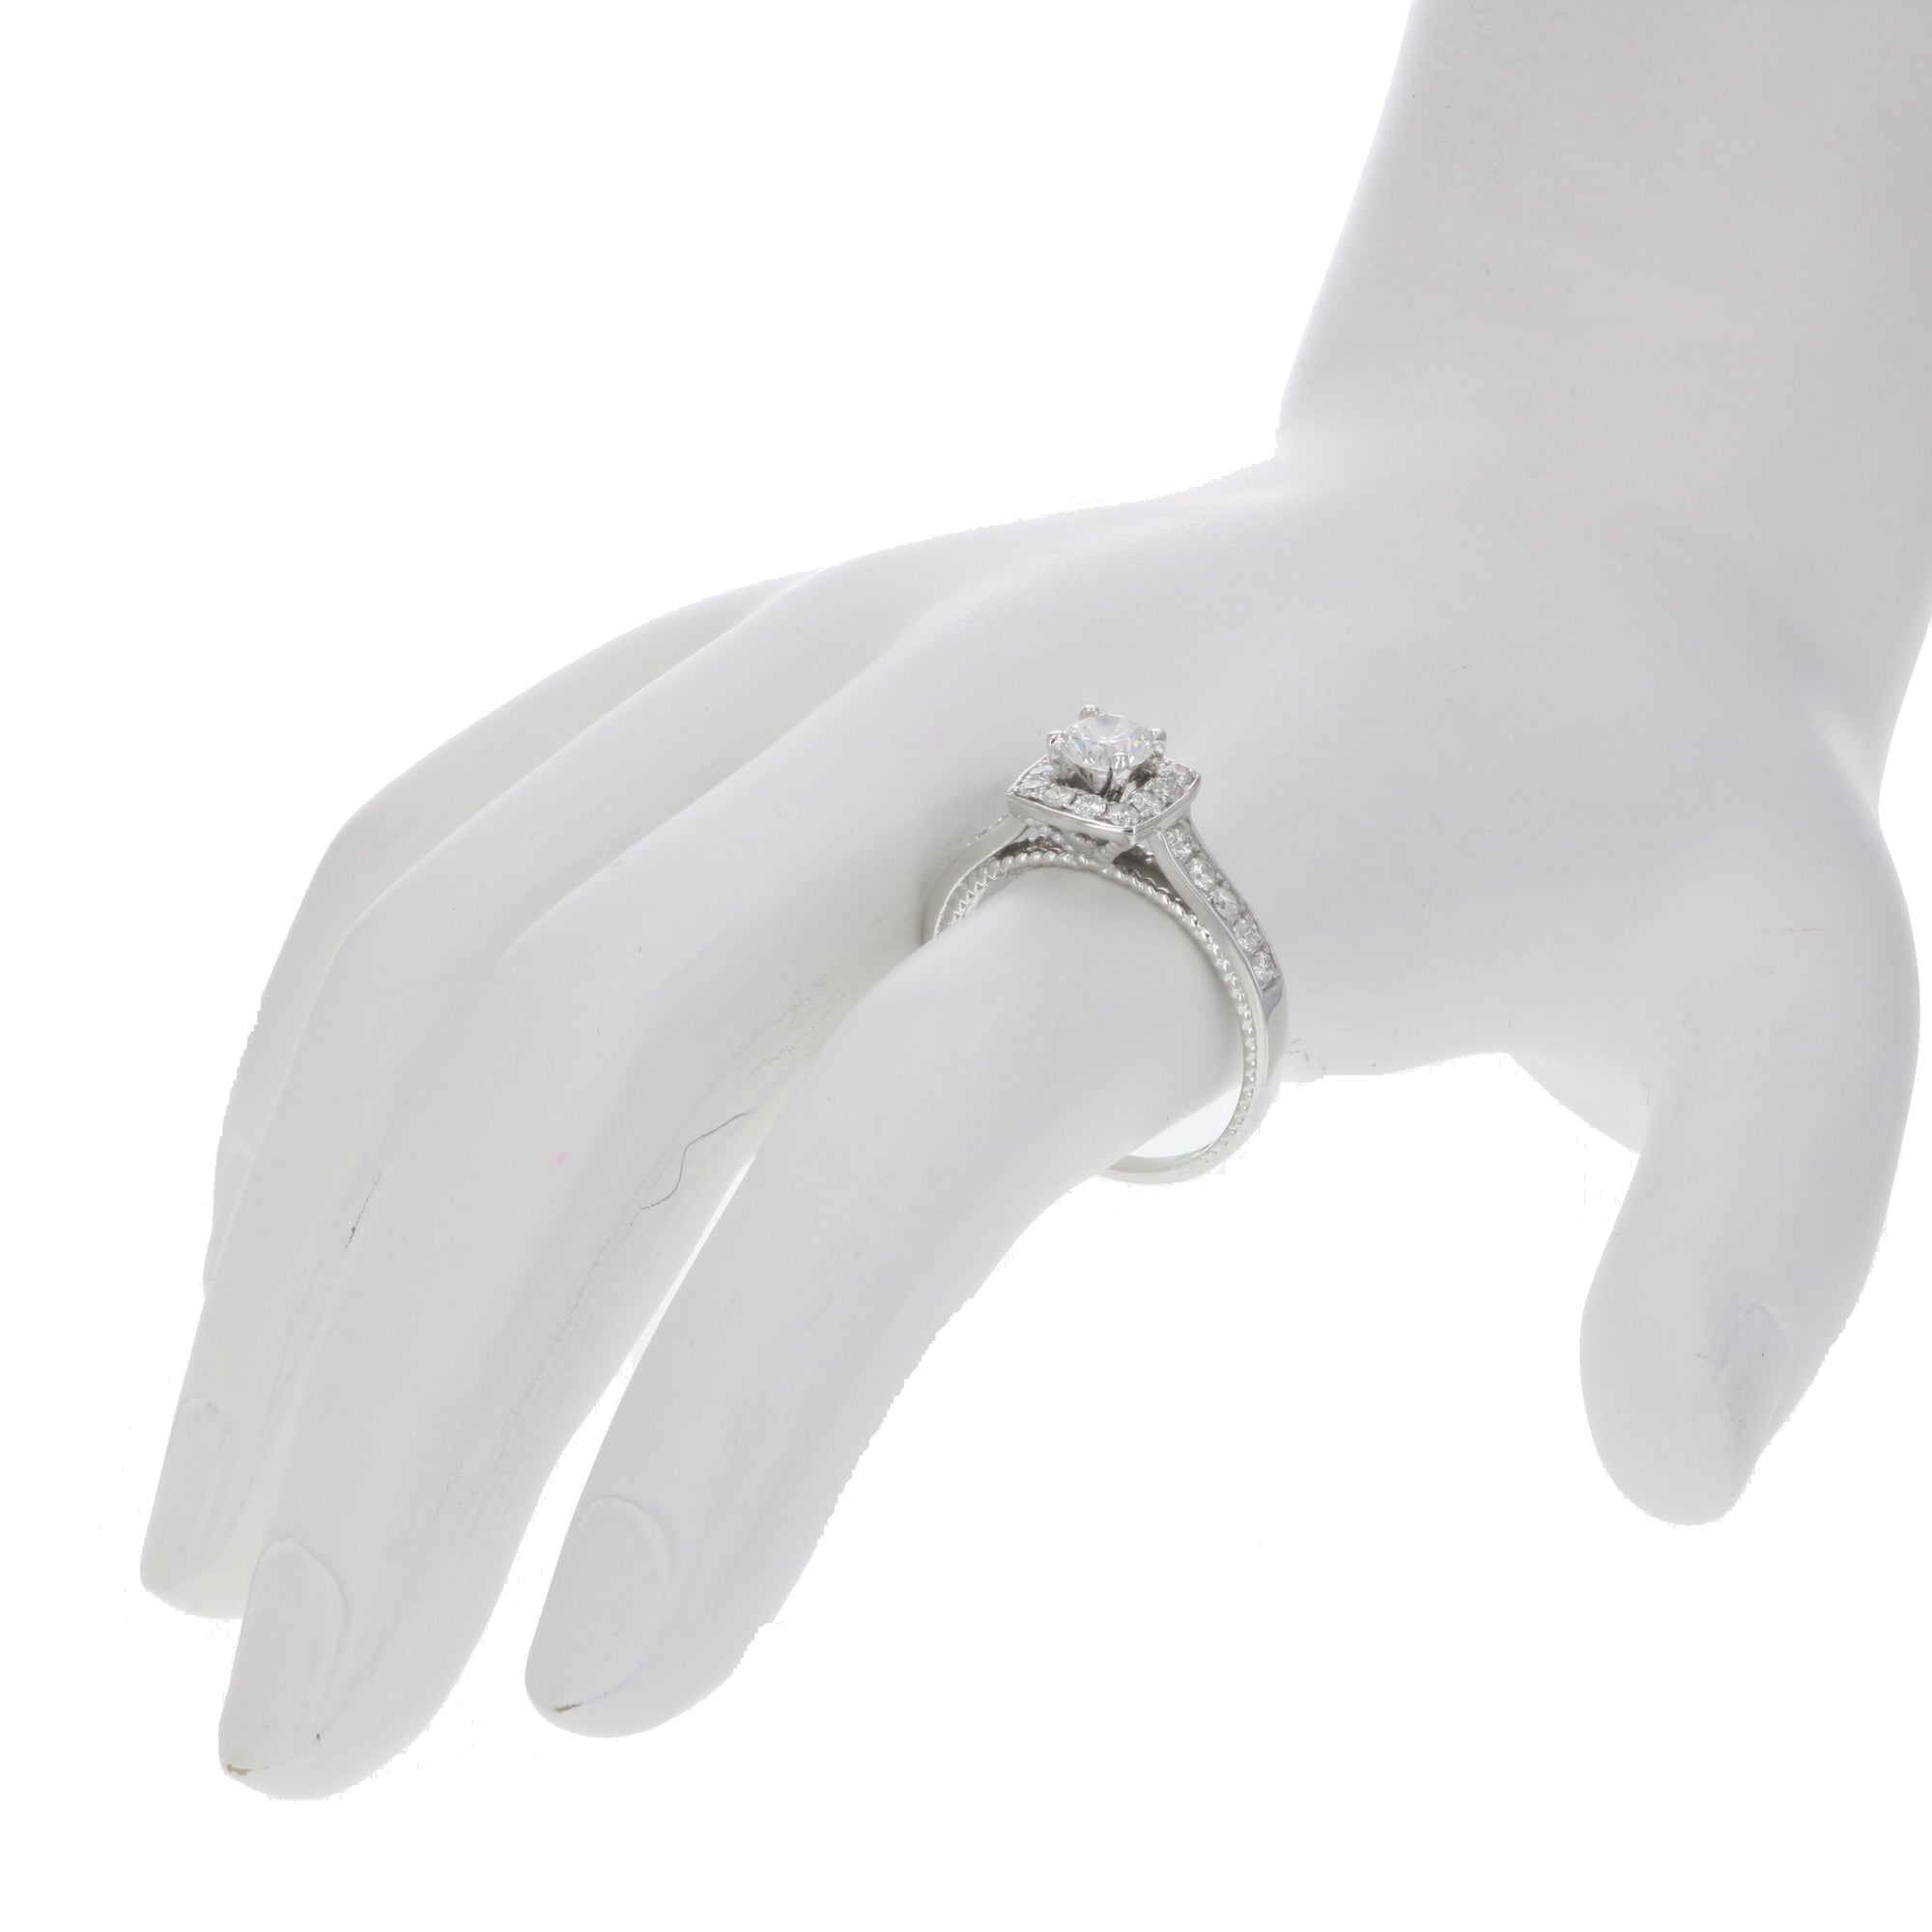 3/4 cttw Diamond Milgrain Wedding Engagement Ring Cushion 14K White Gold Bridal